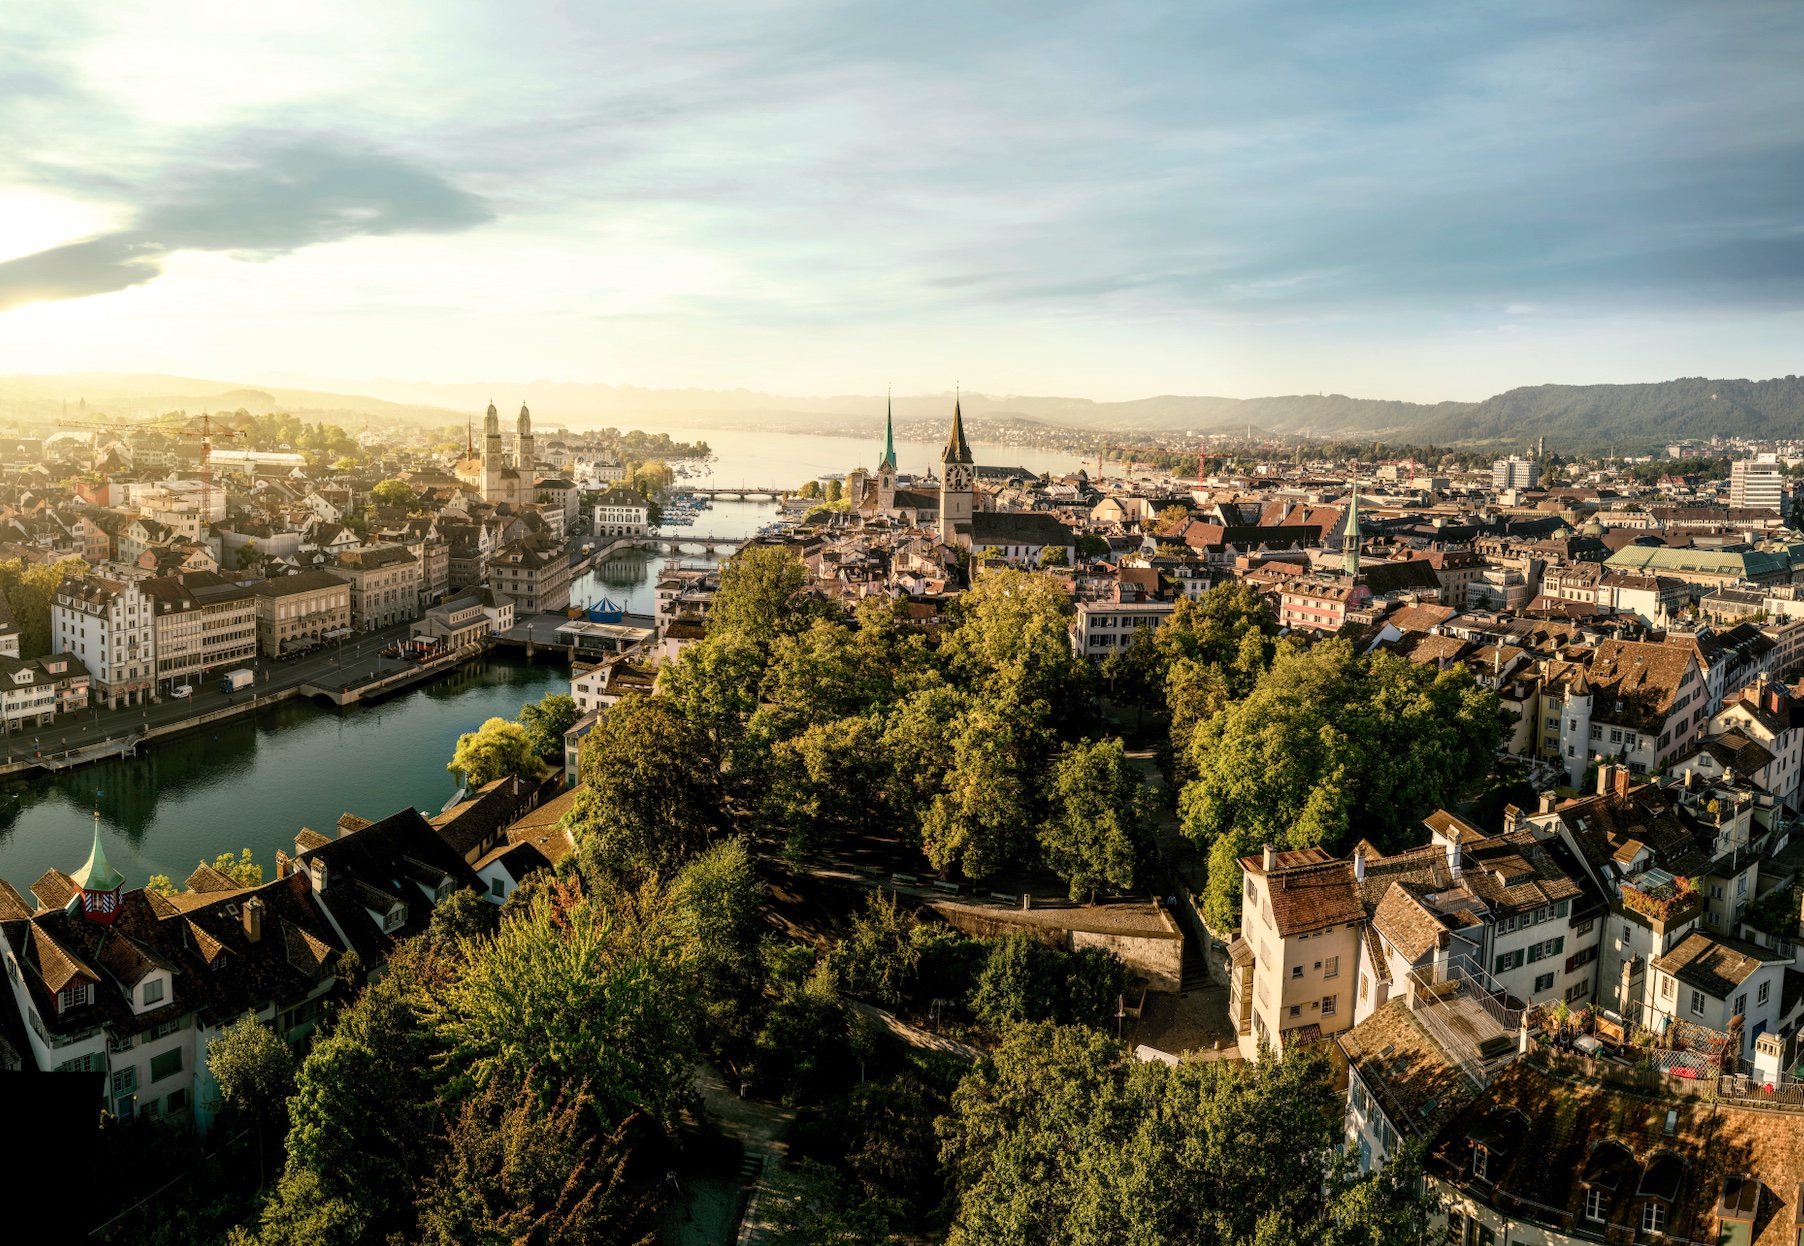 Zurich’s Old Town flanks both sides of the Limmat River. Zürich Tourism